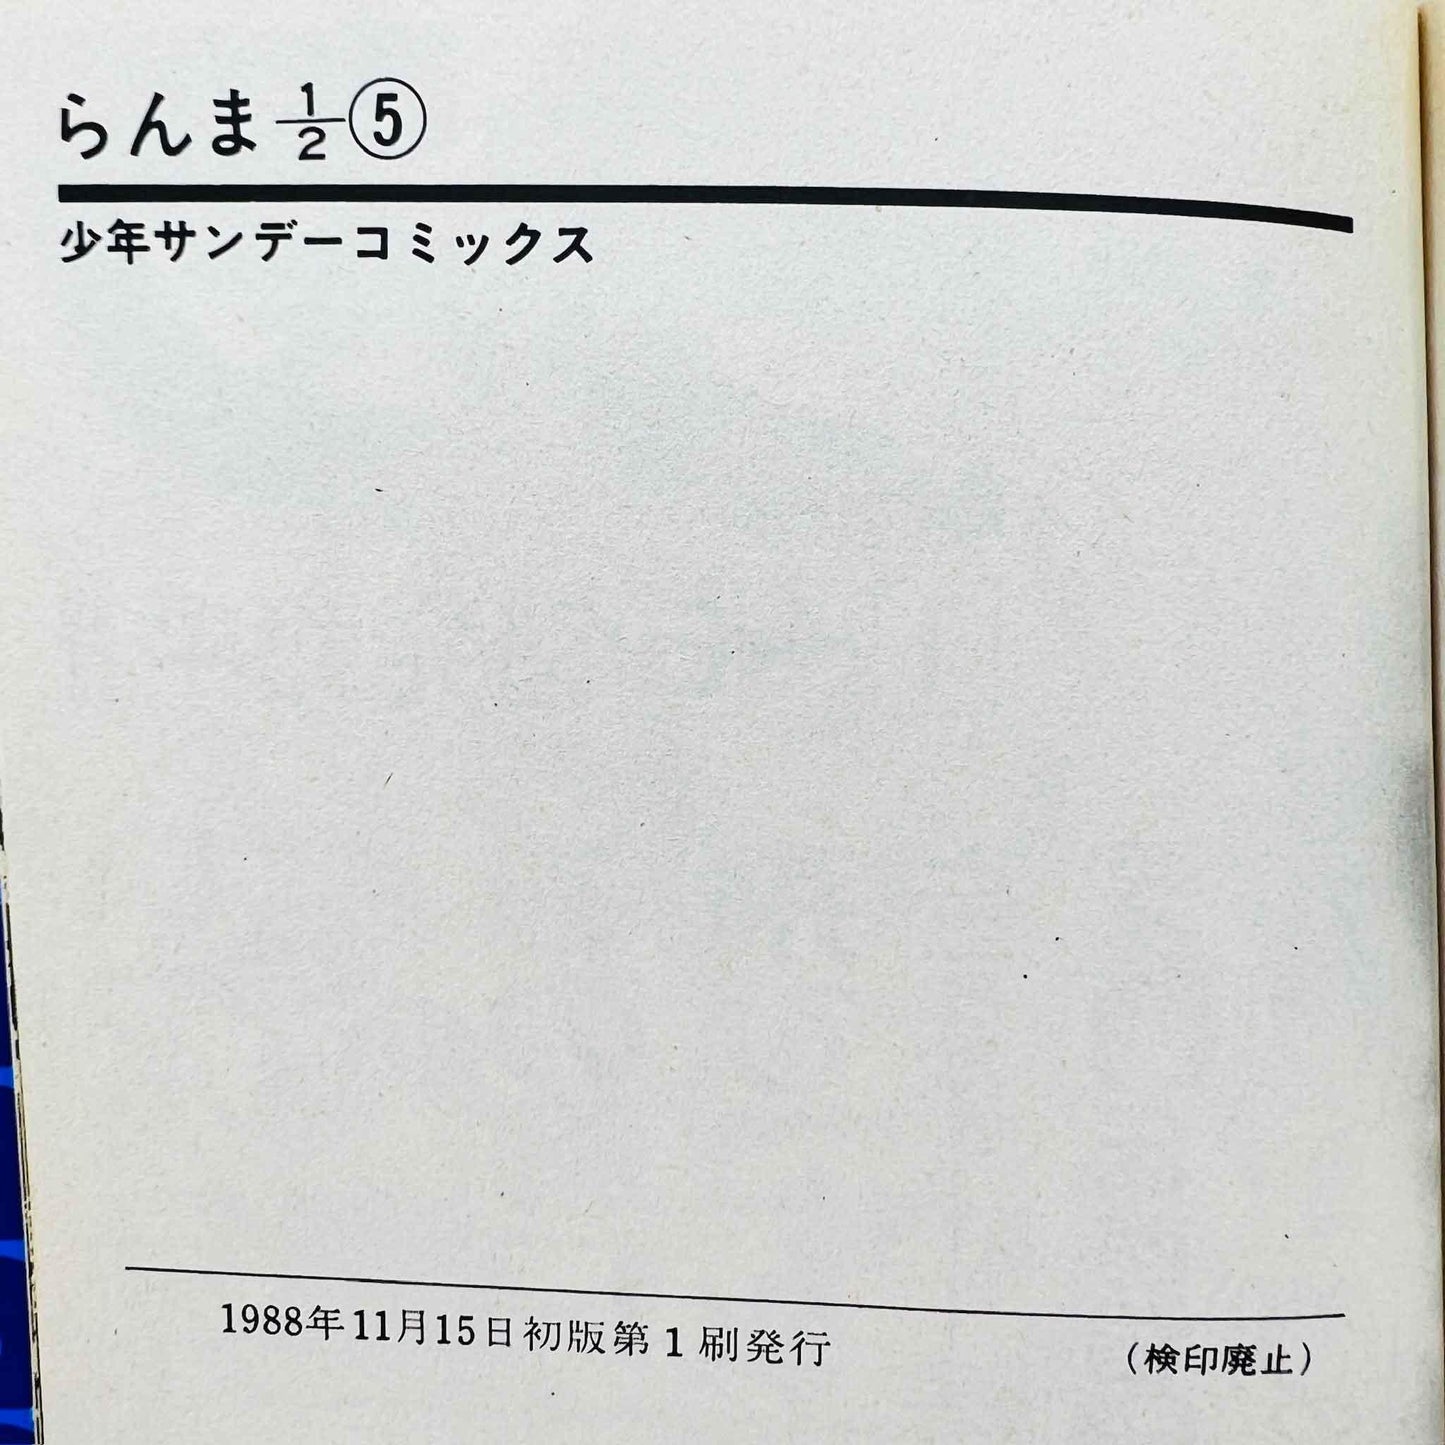 Ranma ½ - Volume 05 - 1stPrint.net - 1st First Print Edition Manga Store - M-RANMA-05-001